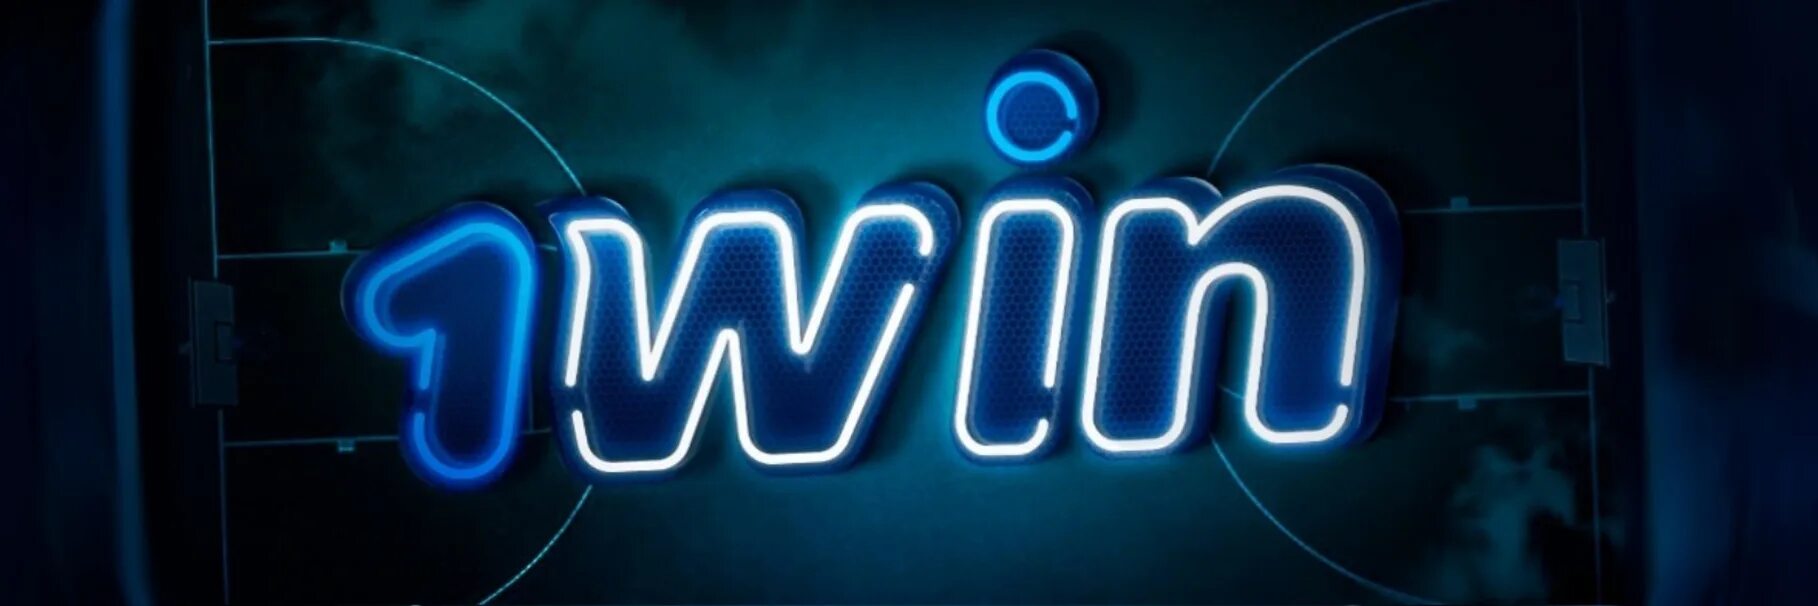 1win личный vk com barat. 1win. 1win казино. 1win баннер. 1win логотип.